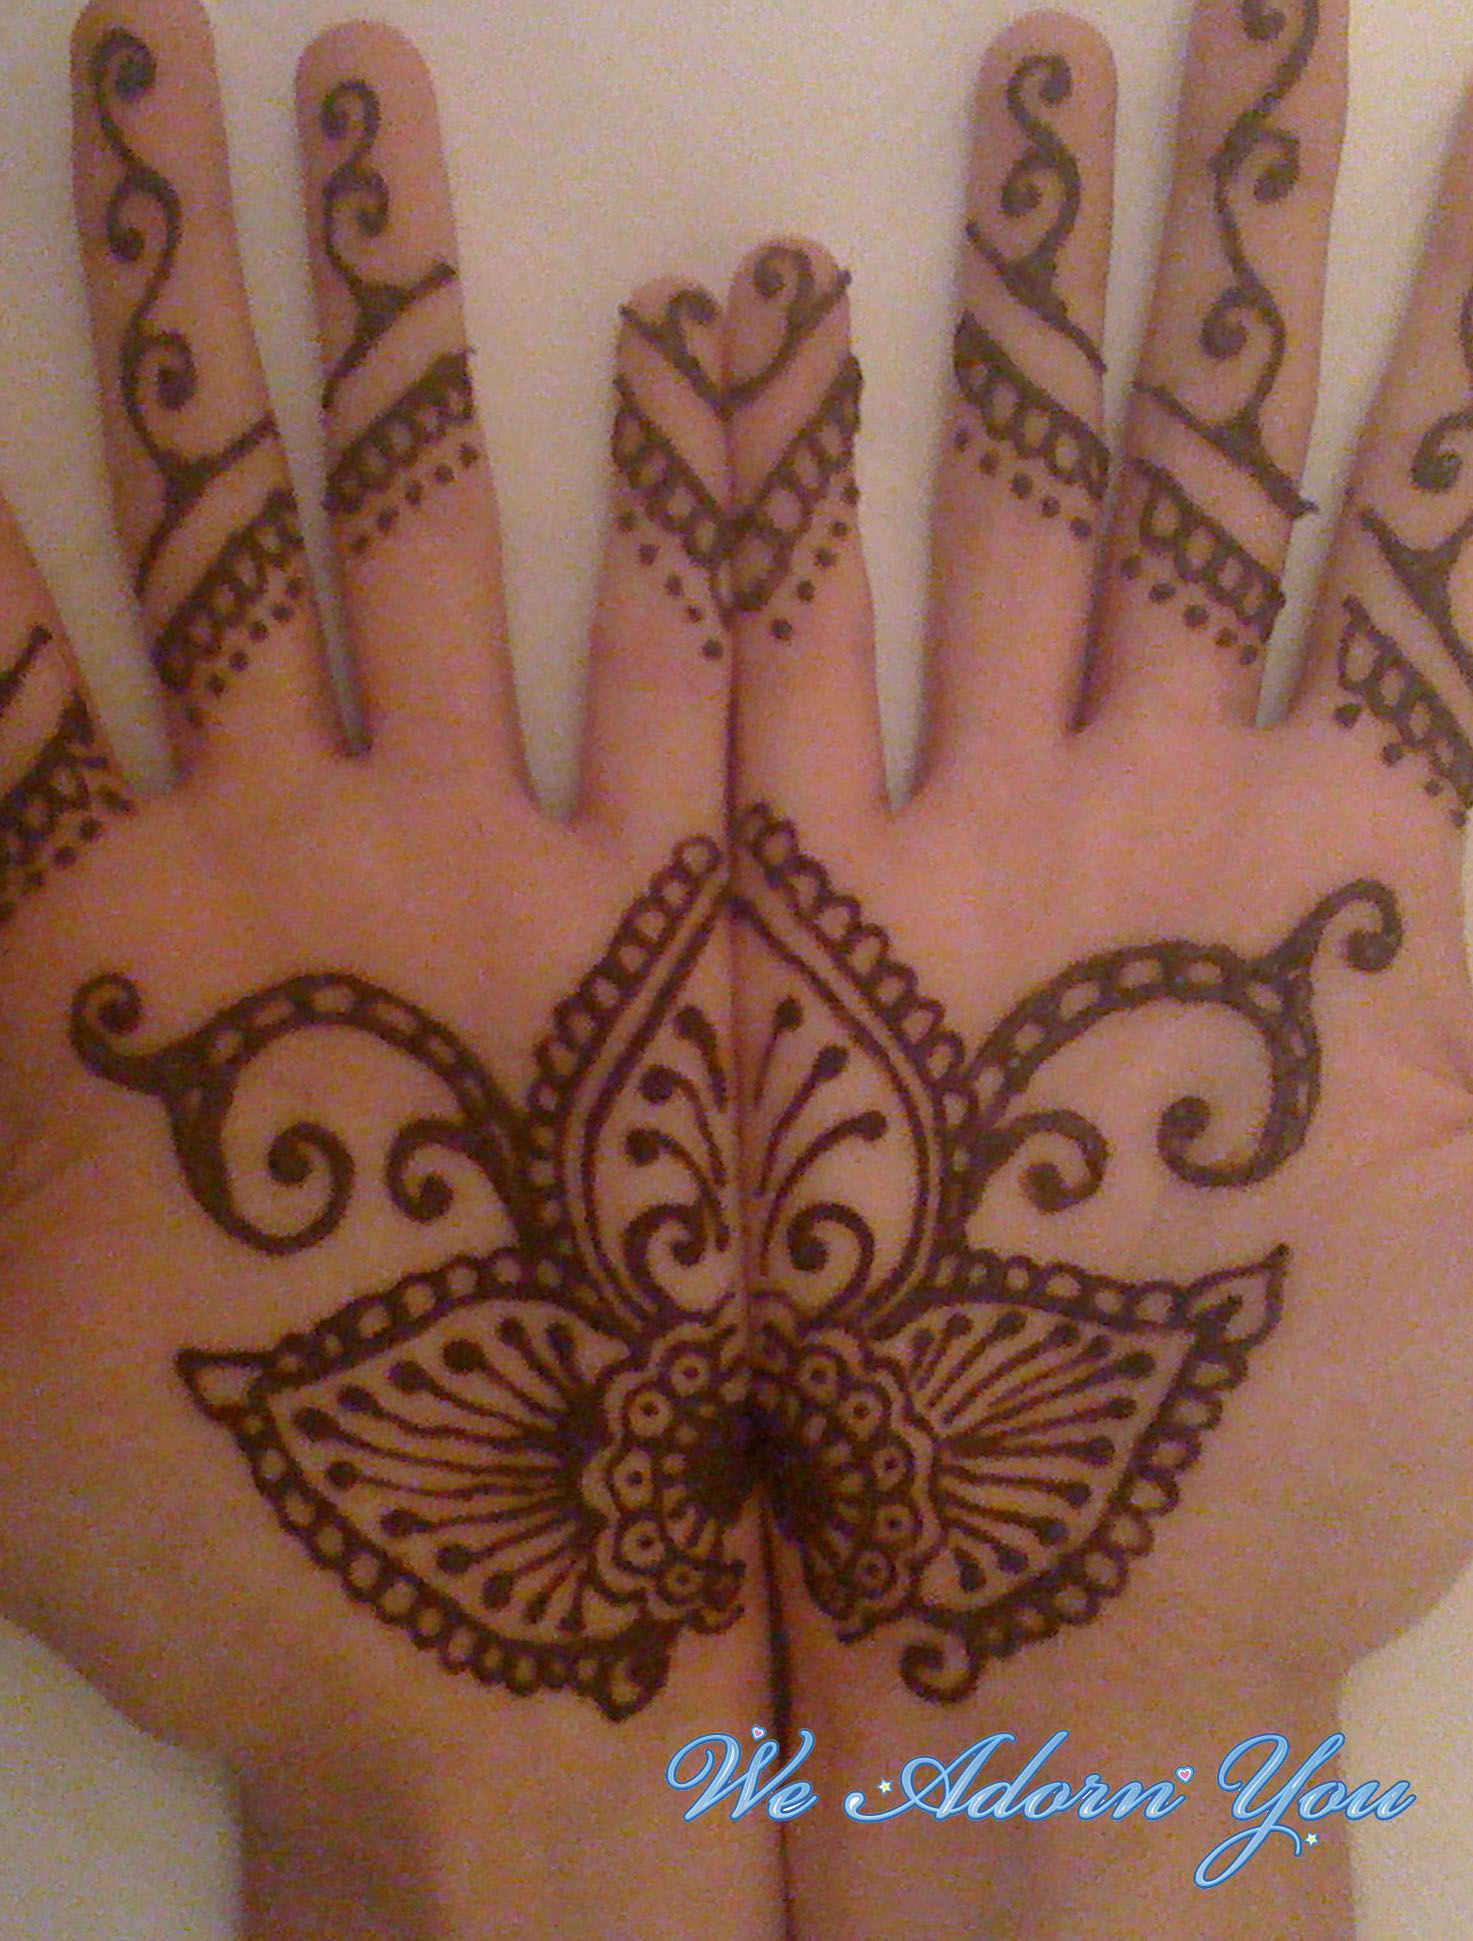 Henna Hand NYC - We Adorn You.jpg